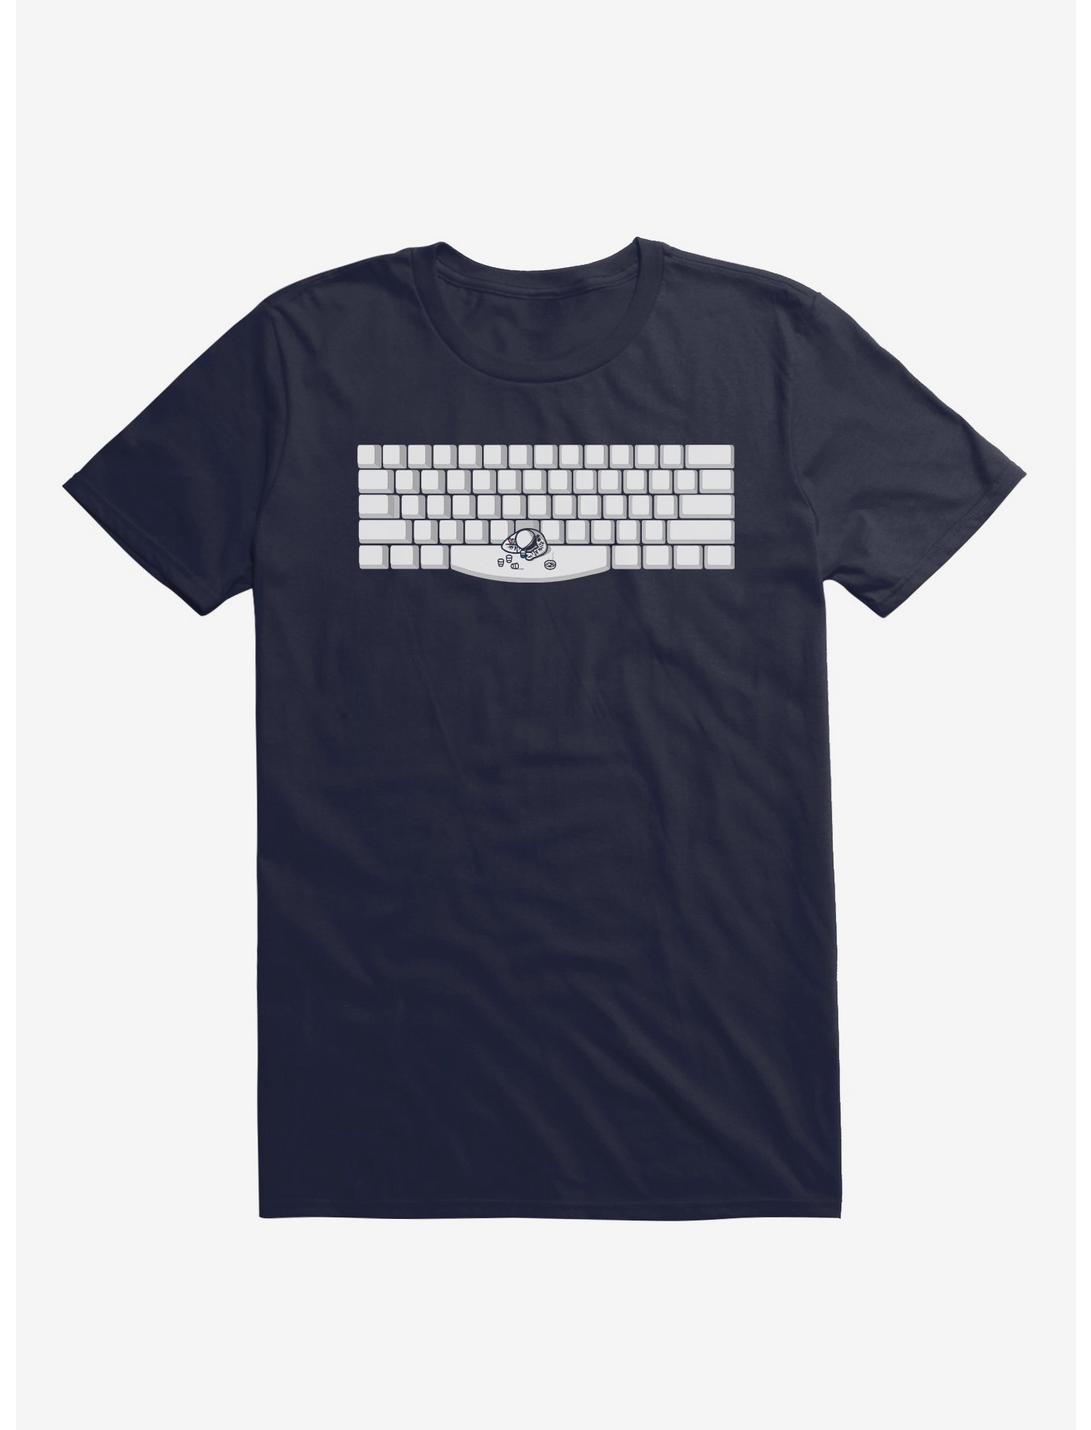 Spacebar Astronaut Keyboard Navy Blue T-Shirt, NAVY, hi-res